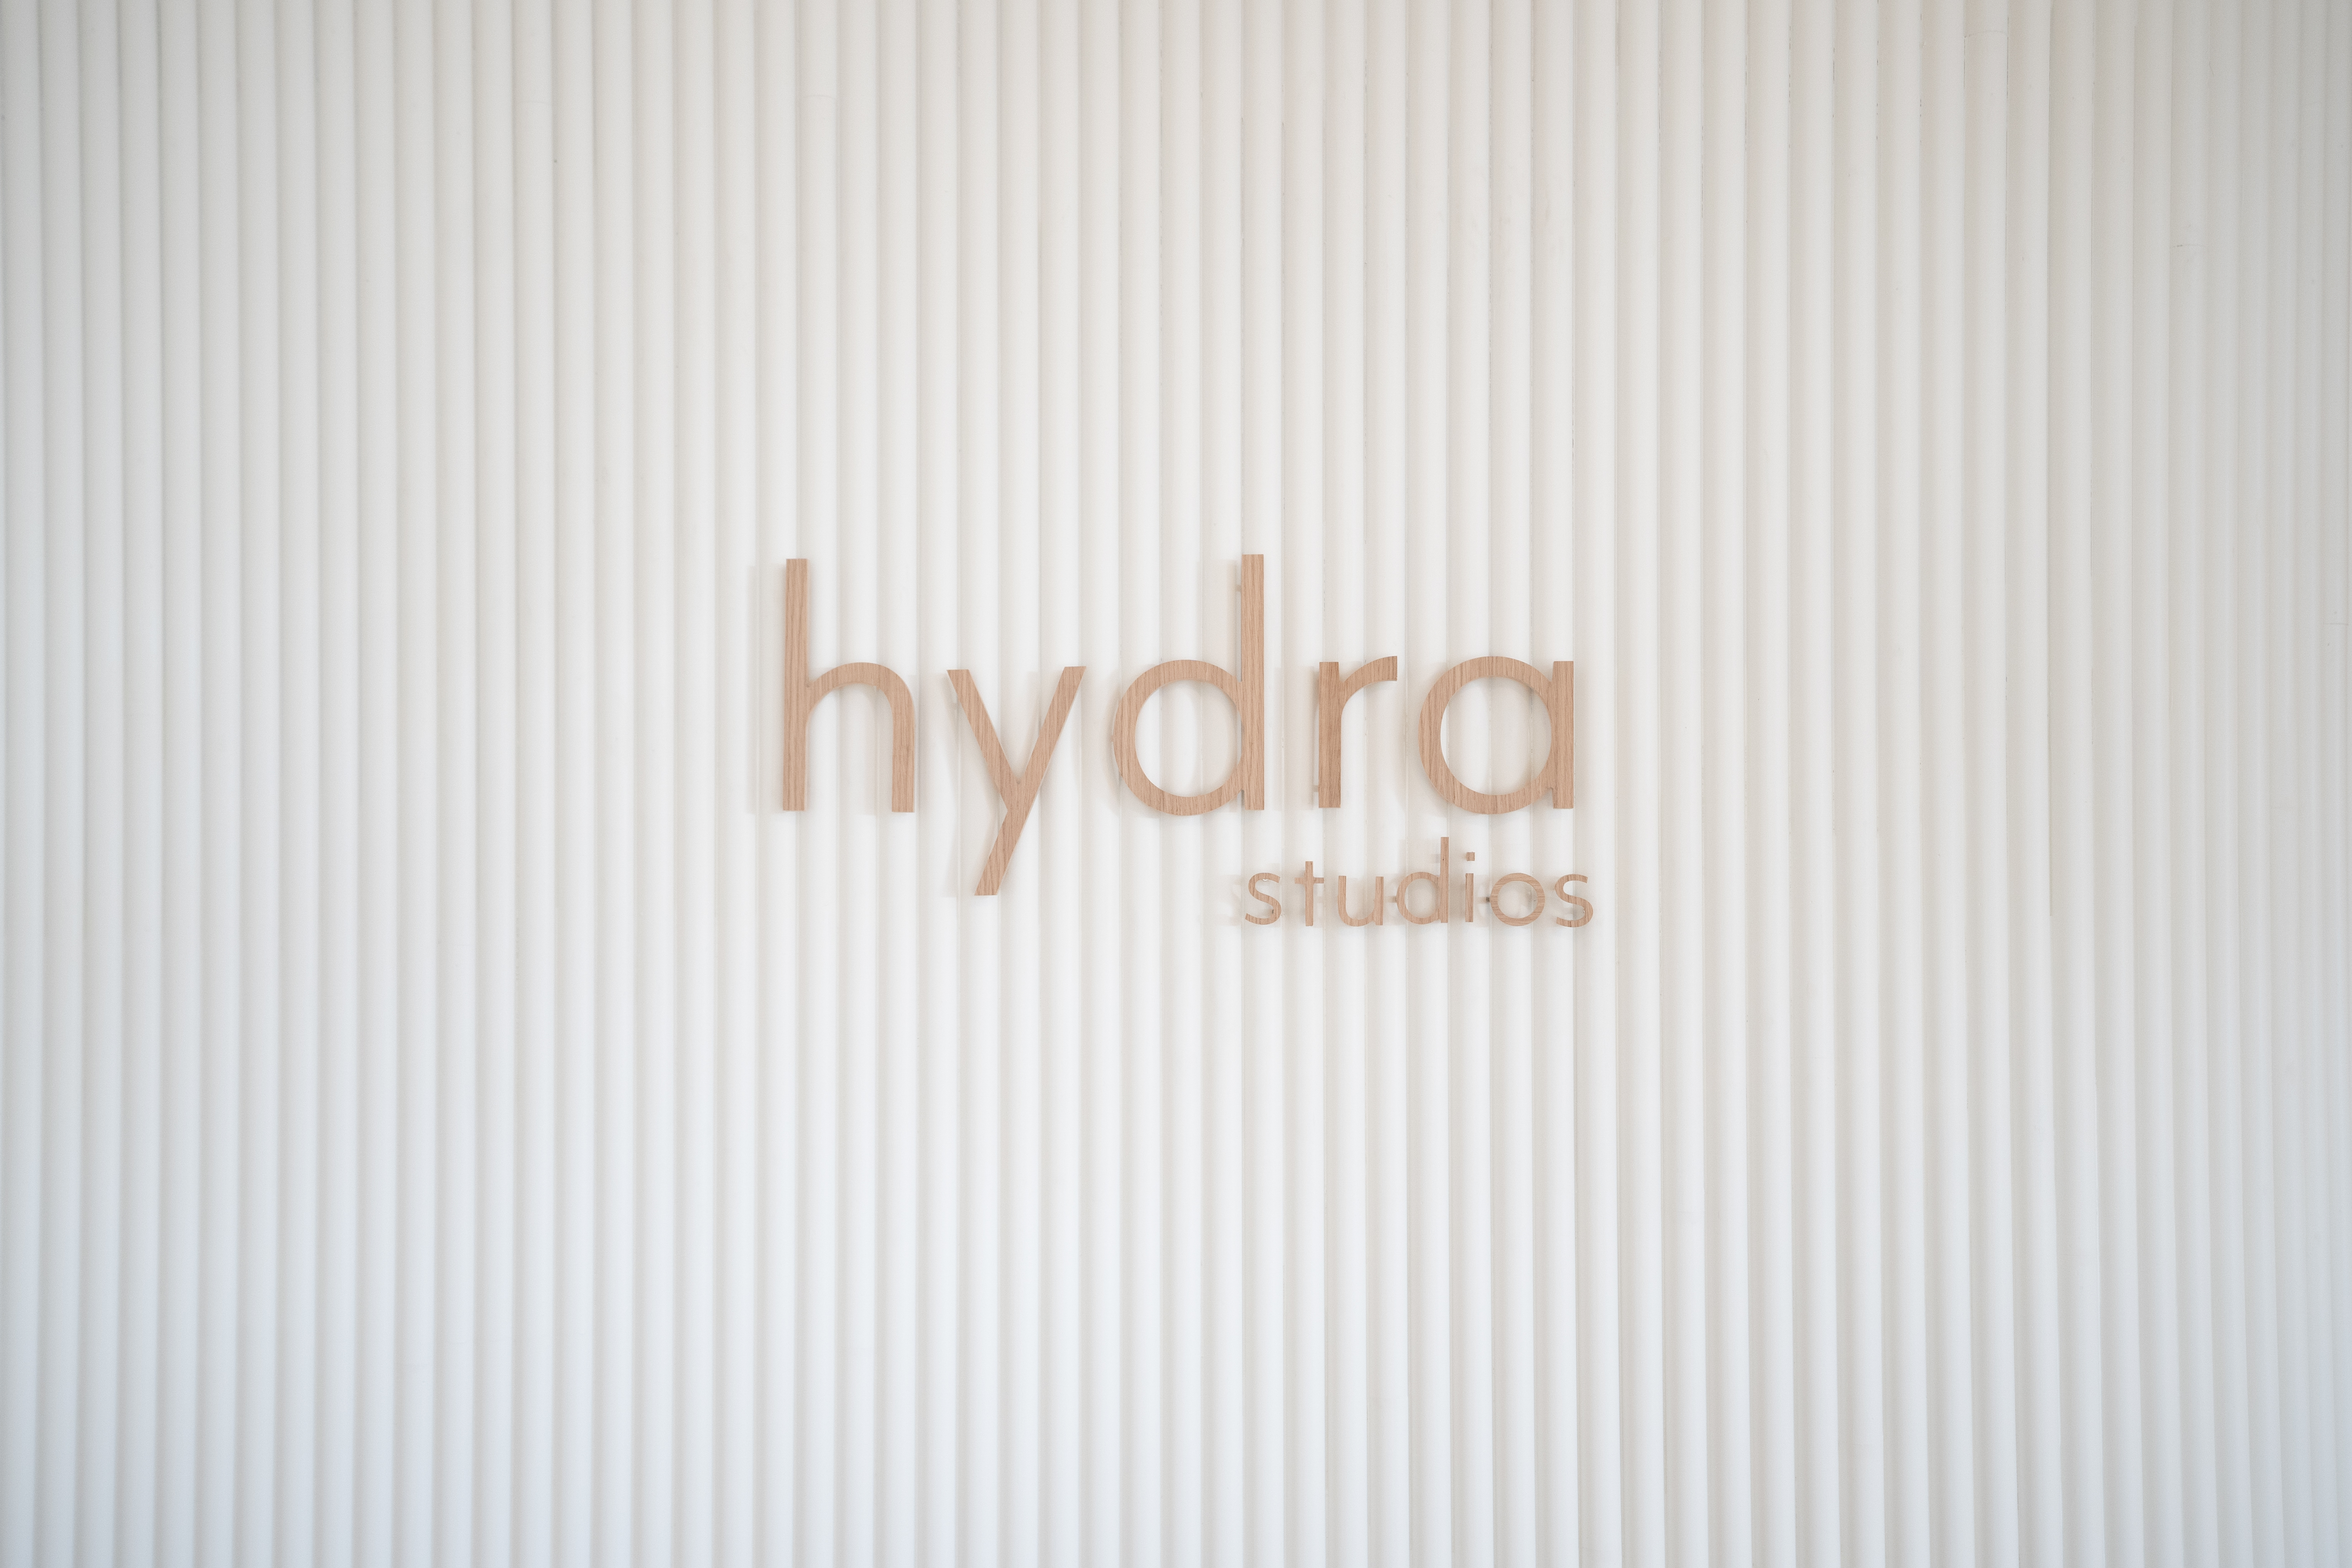 HYDRA STUDIOS FIDI